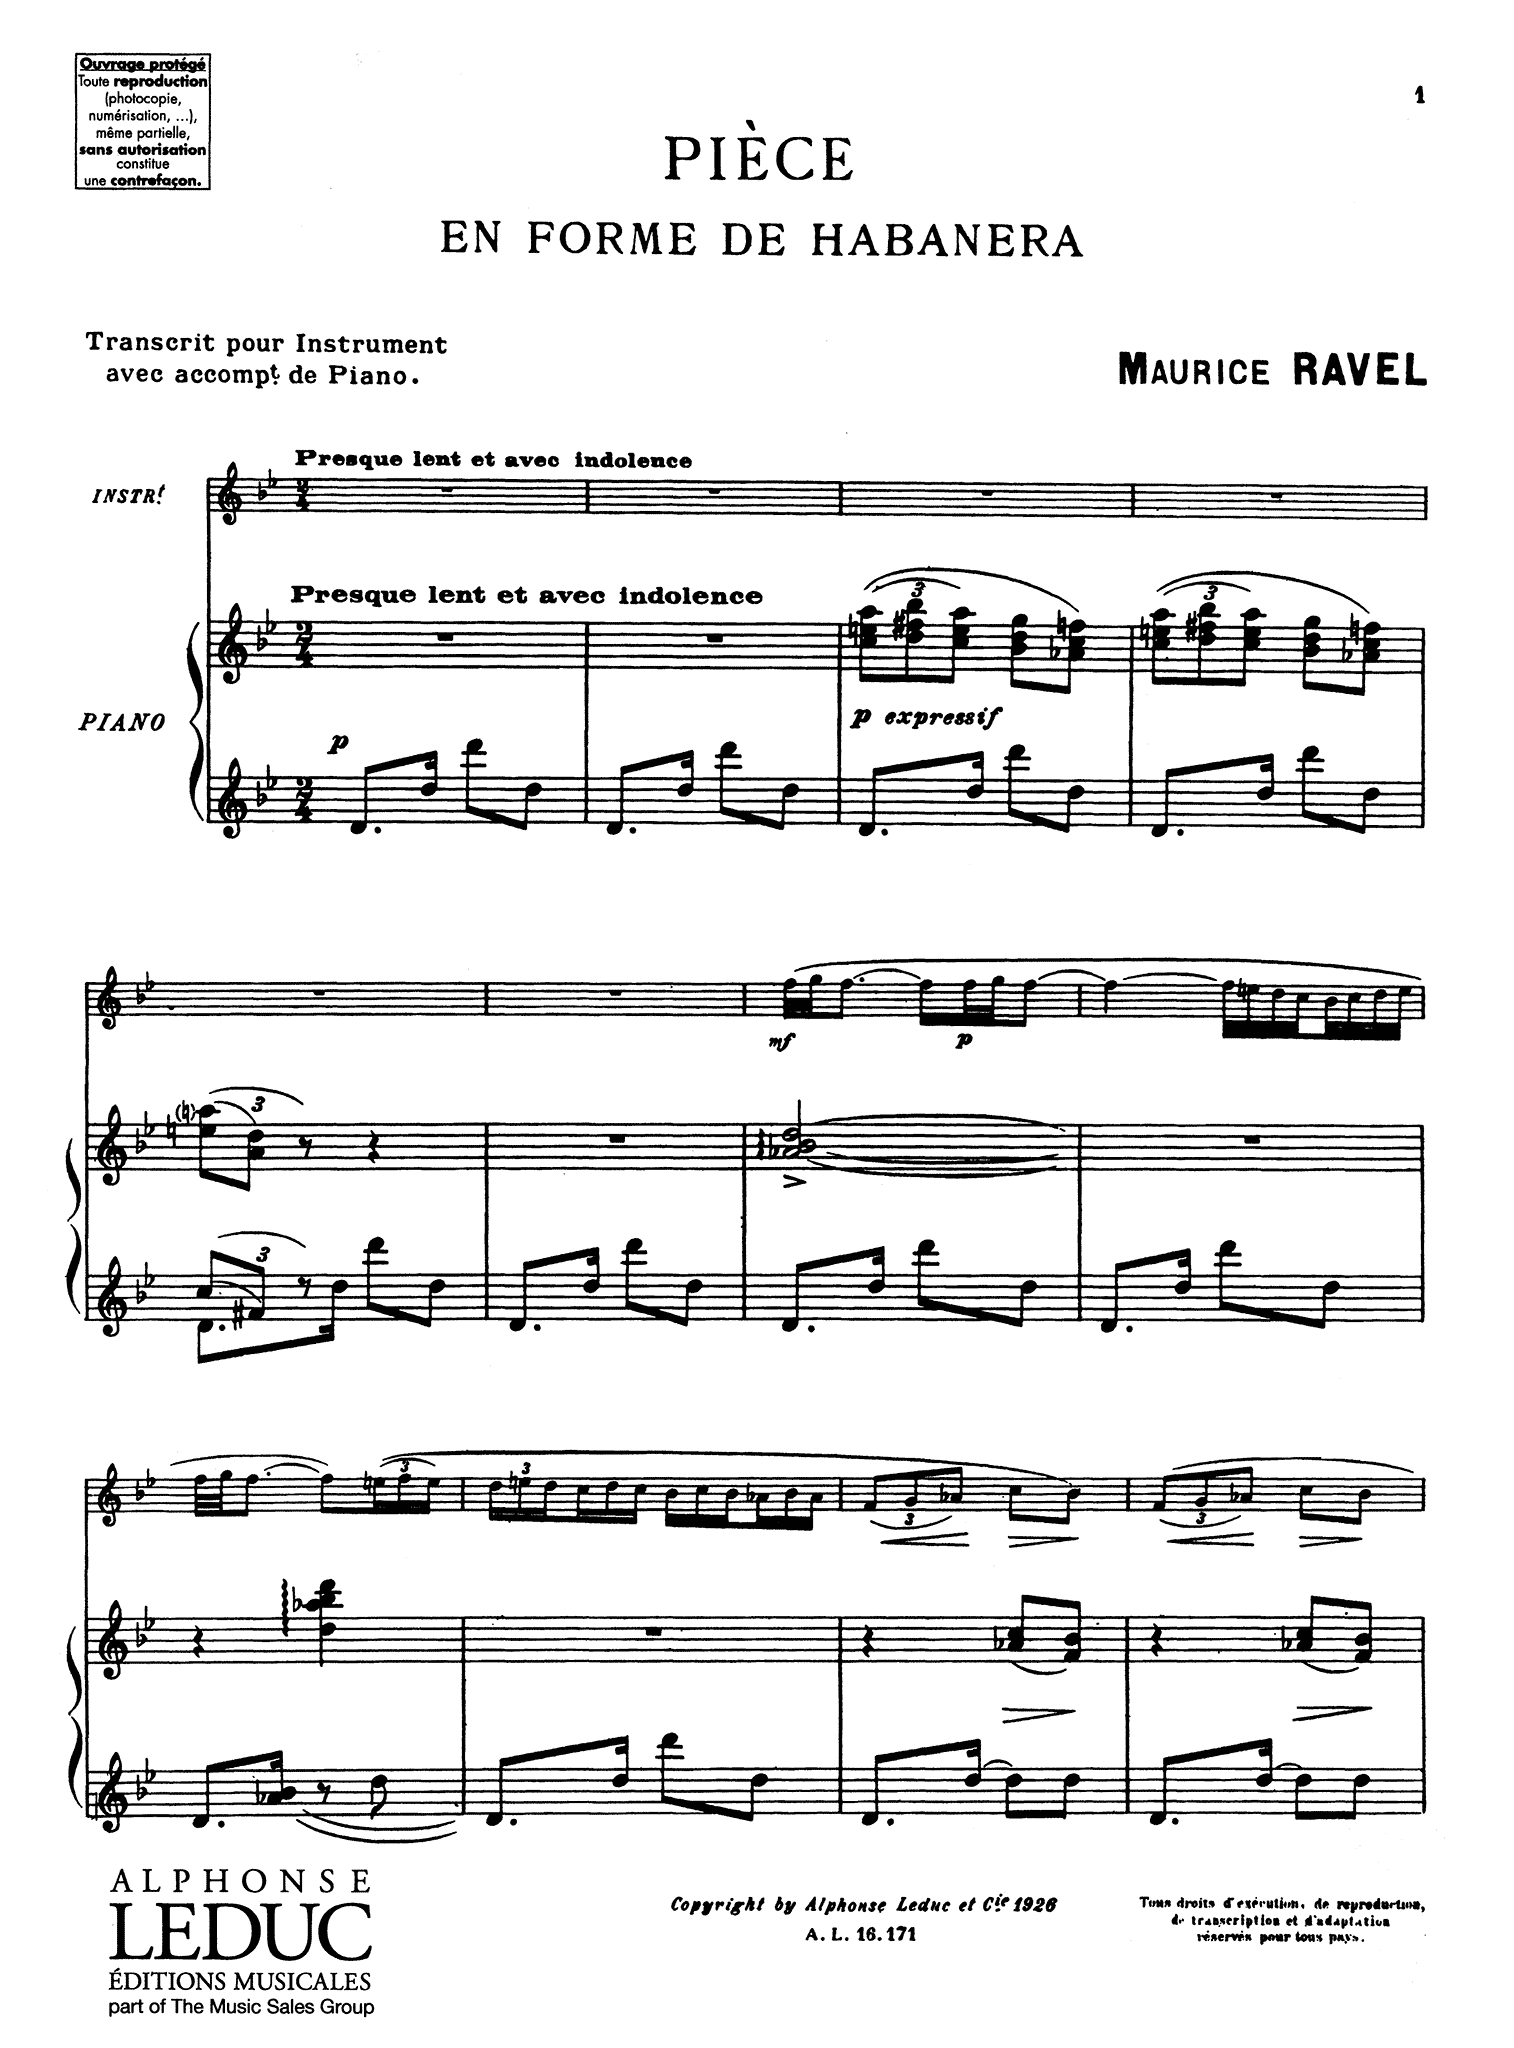 Ravel Pièce en forme de habanera clarinet & piano arrangement Score